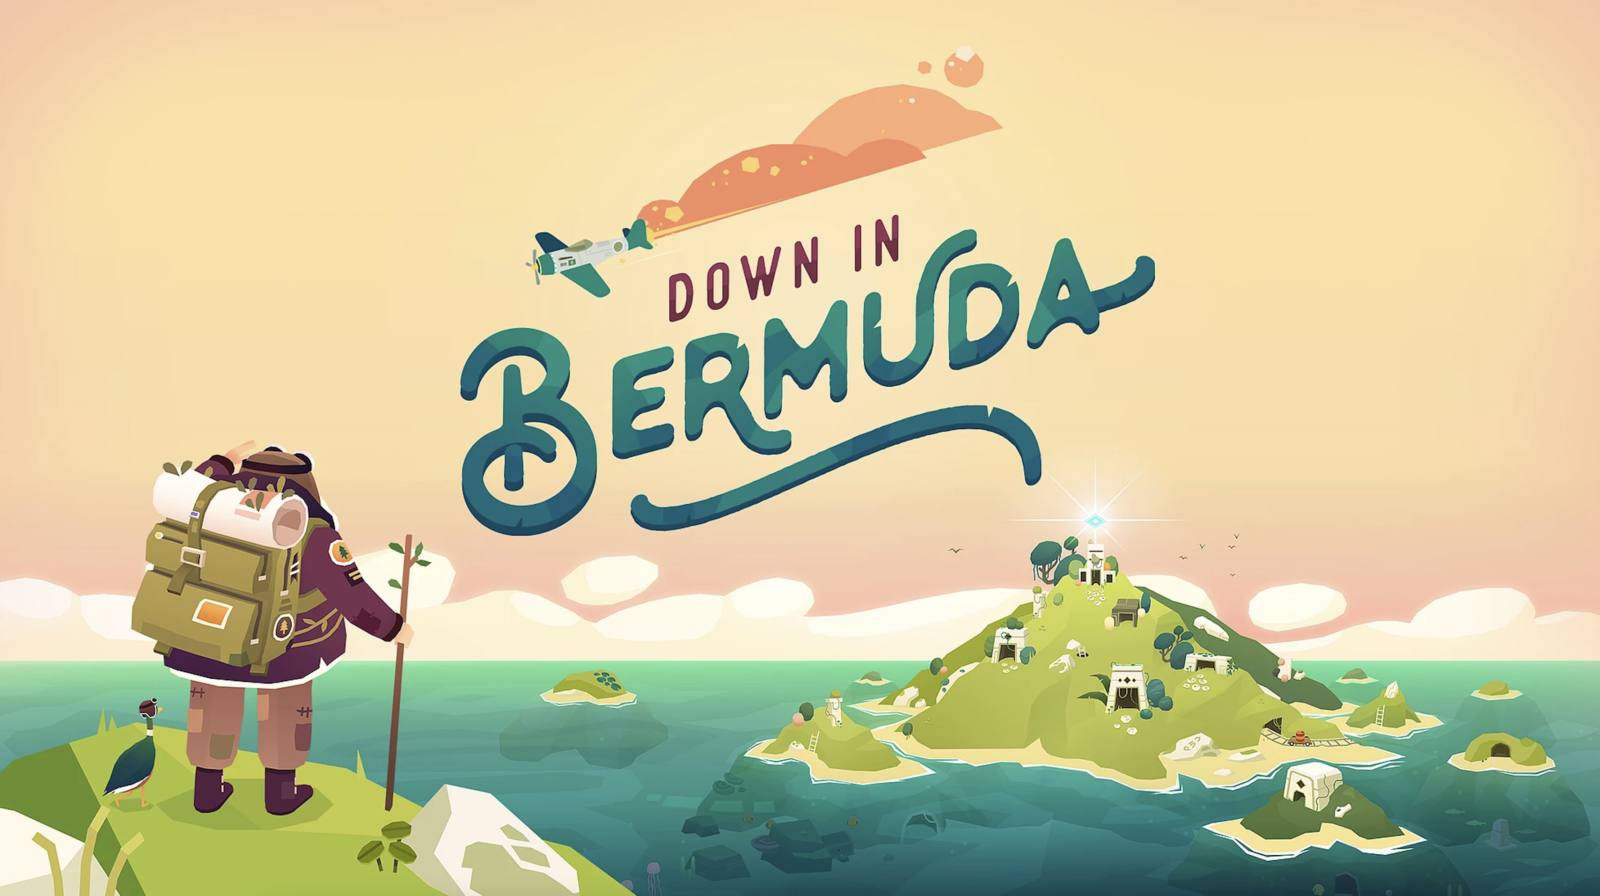 Down in Bermuda - Uma aventura rápida e divertida pelo misterioso